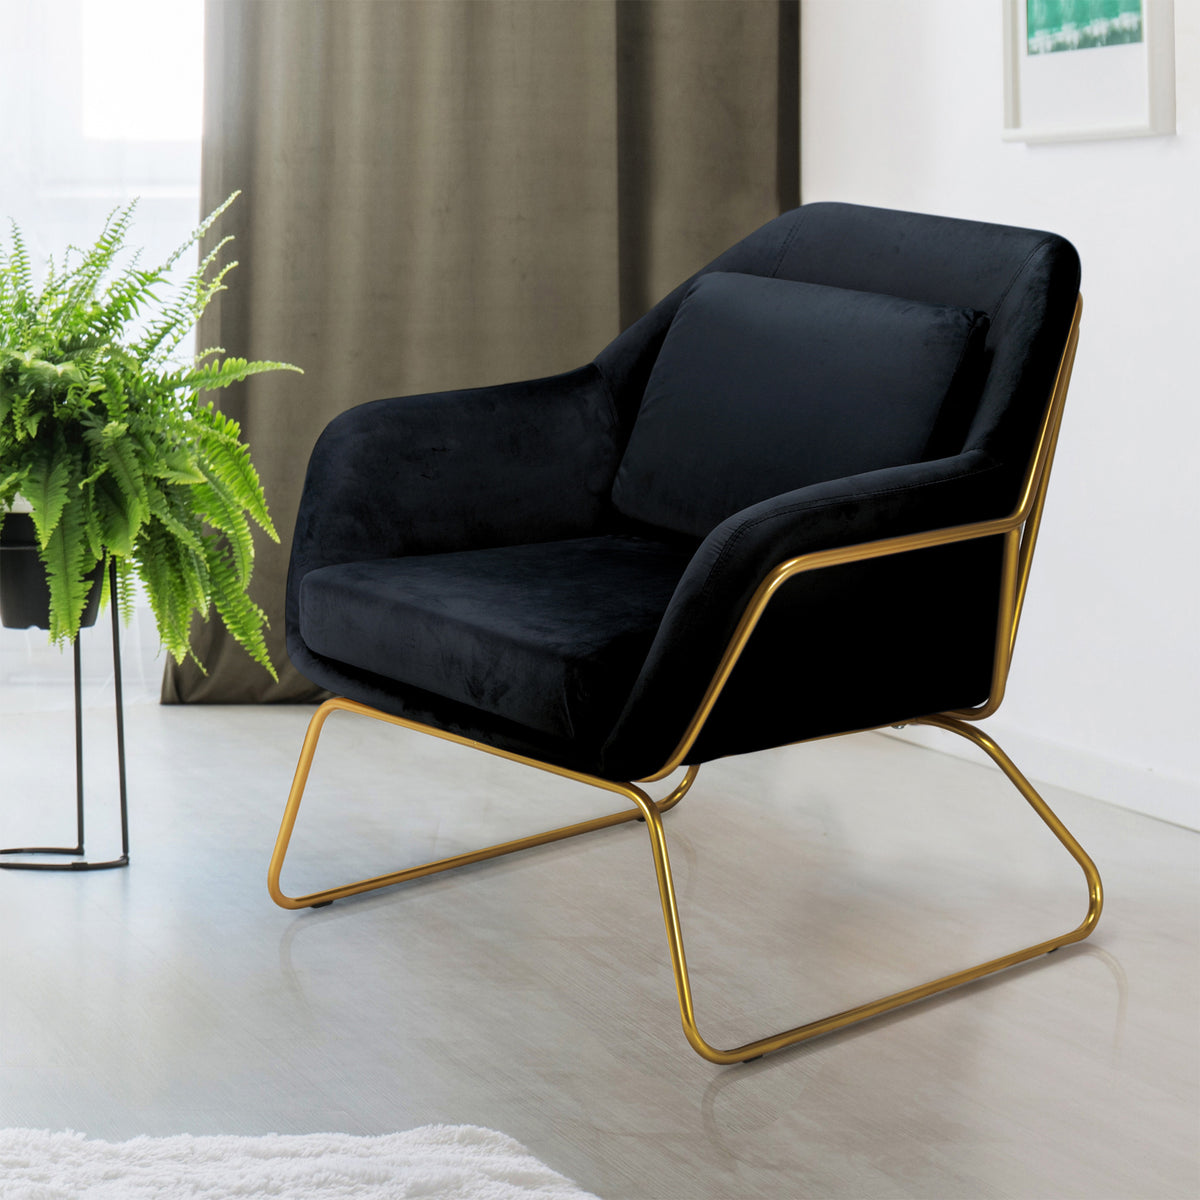 Hallie Black Velvet Chic Accent Chair for living room or reception